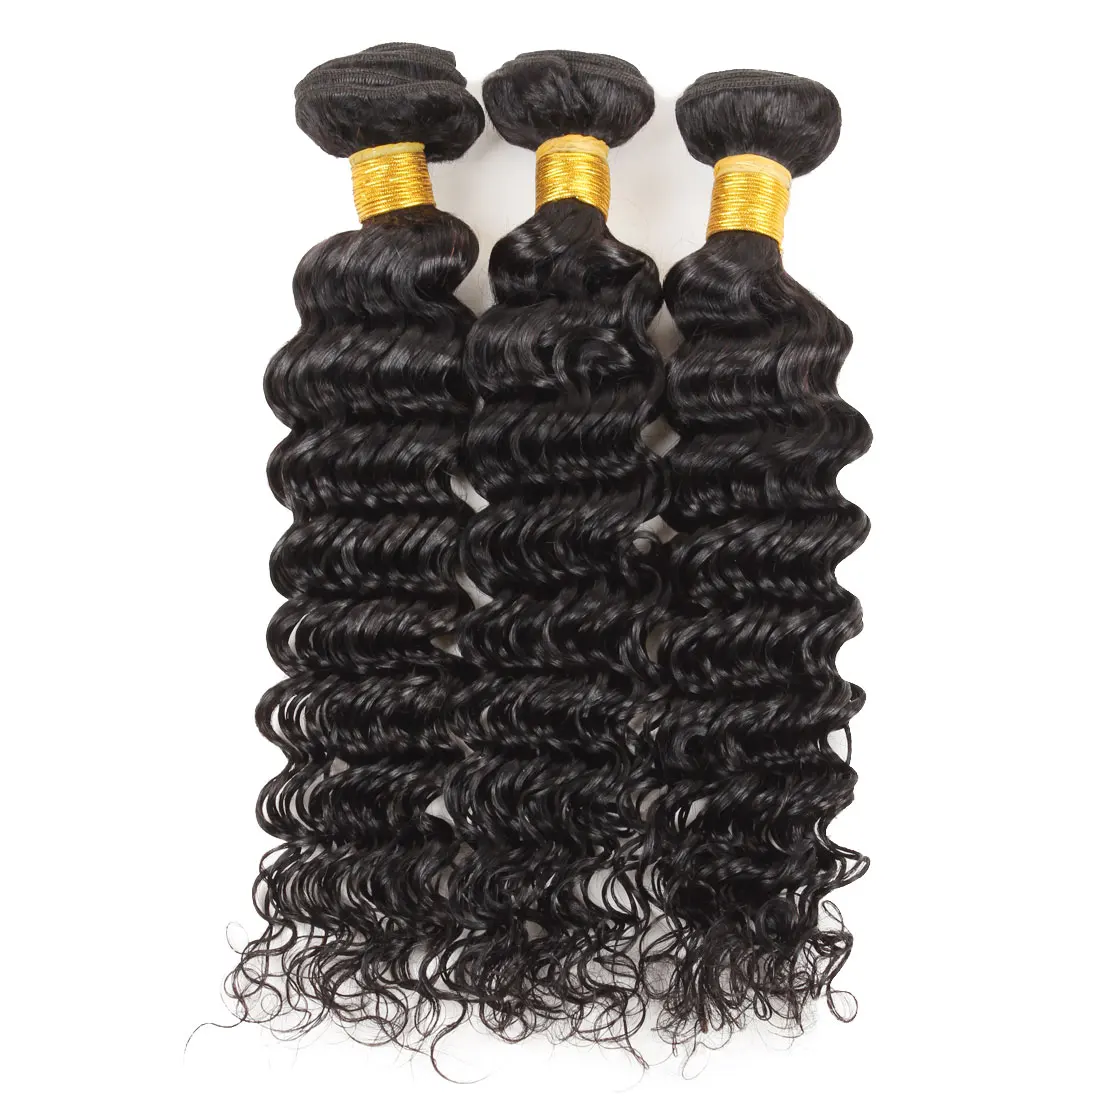 

VAST Deep Wave Bundles Hair Vendors 12a Grade Hair Bundles 100g Human Hair Extension Bundle, Natural colors